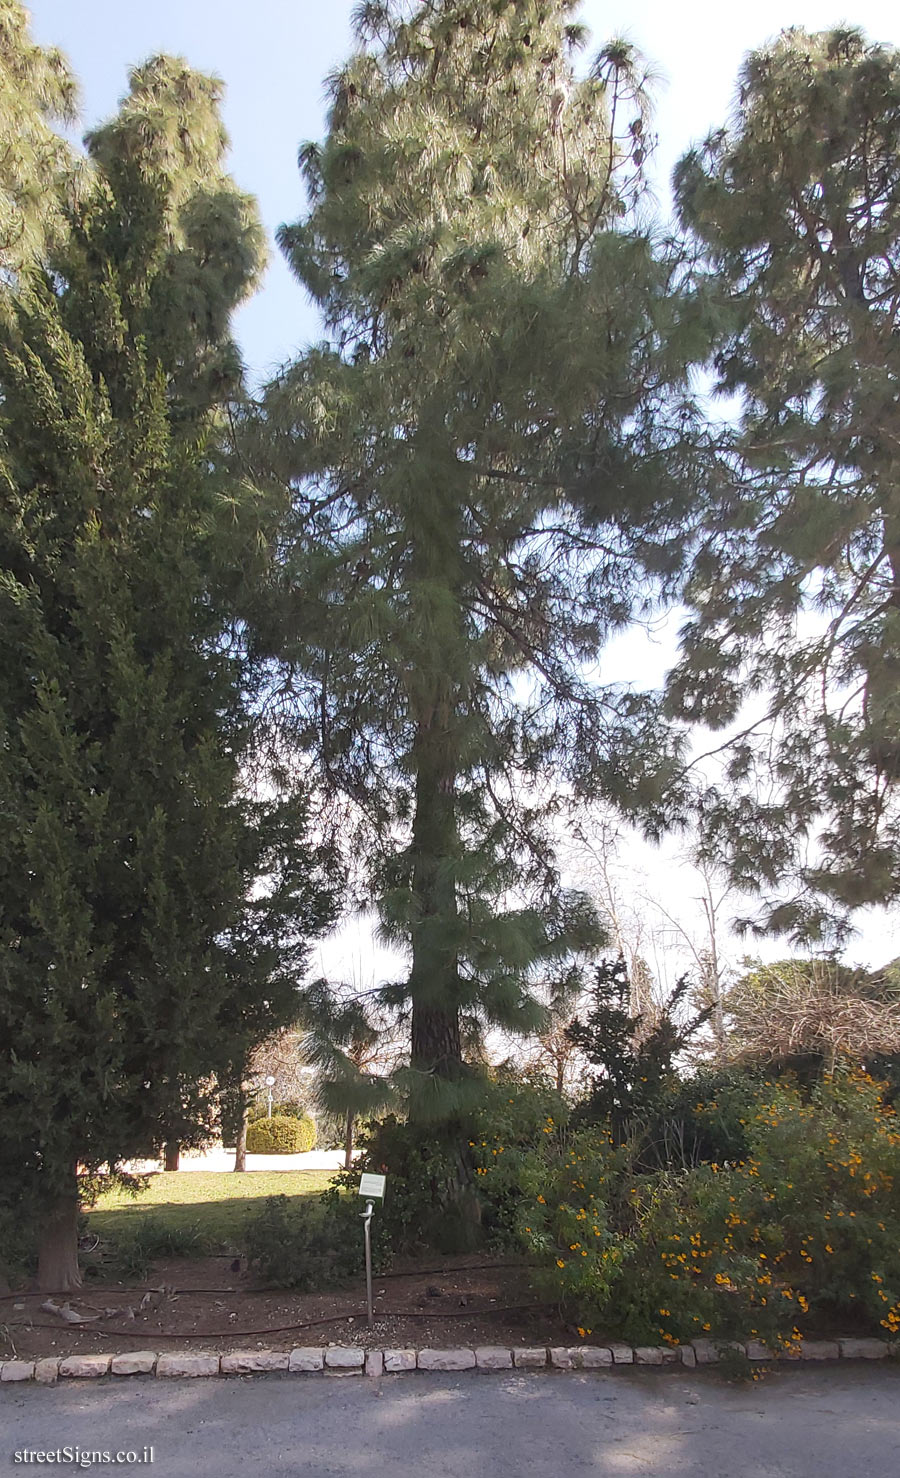 The Hebrew University of Jerusalem - Discovery Tree Walk - Canary Islands Pine - Safra Campus